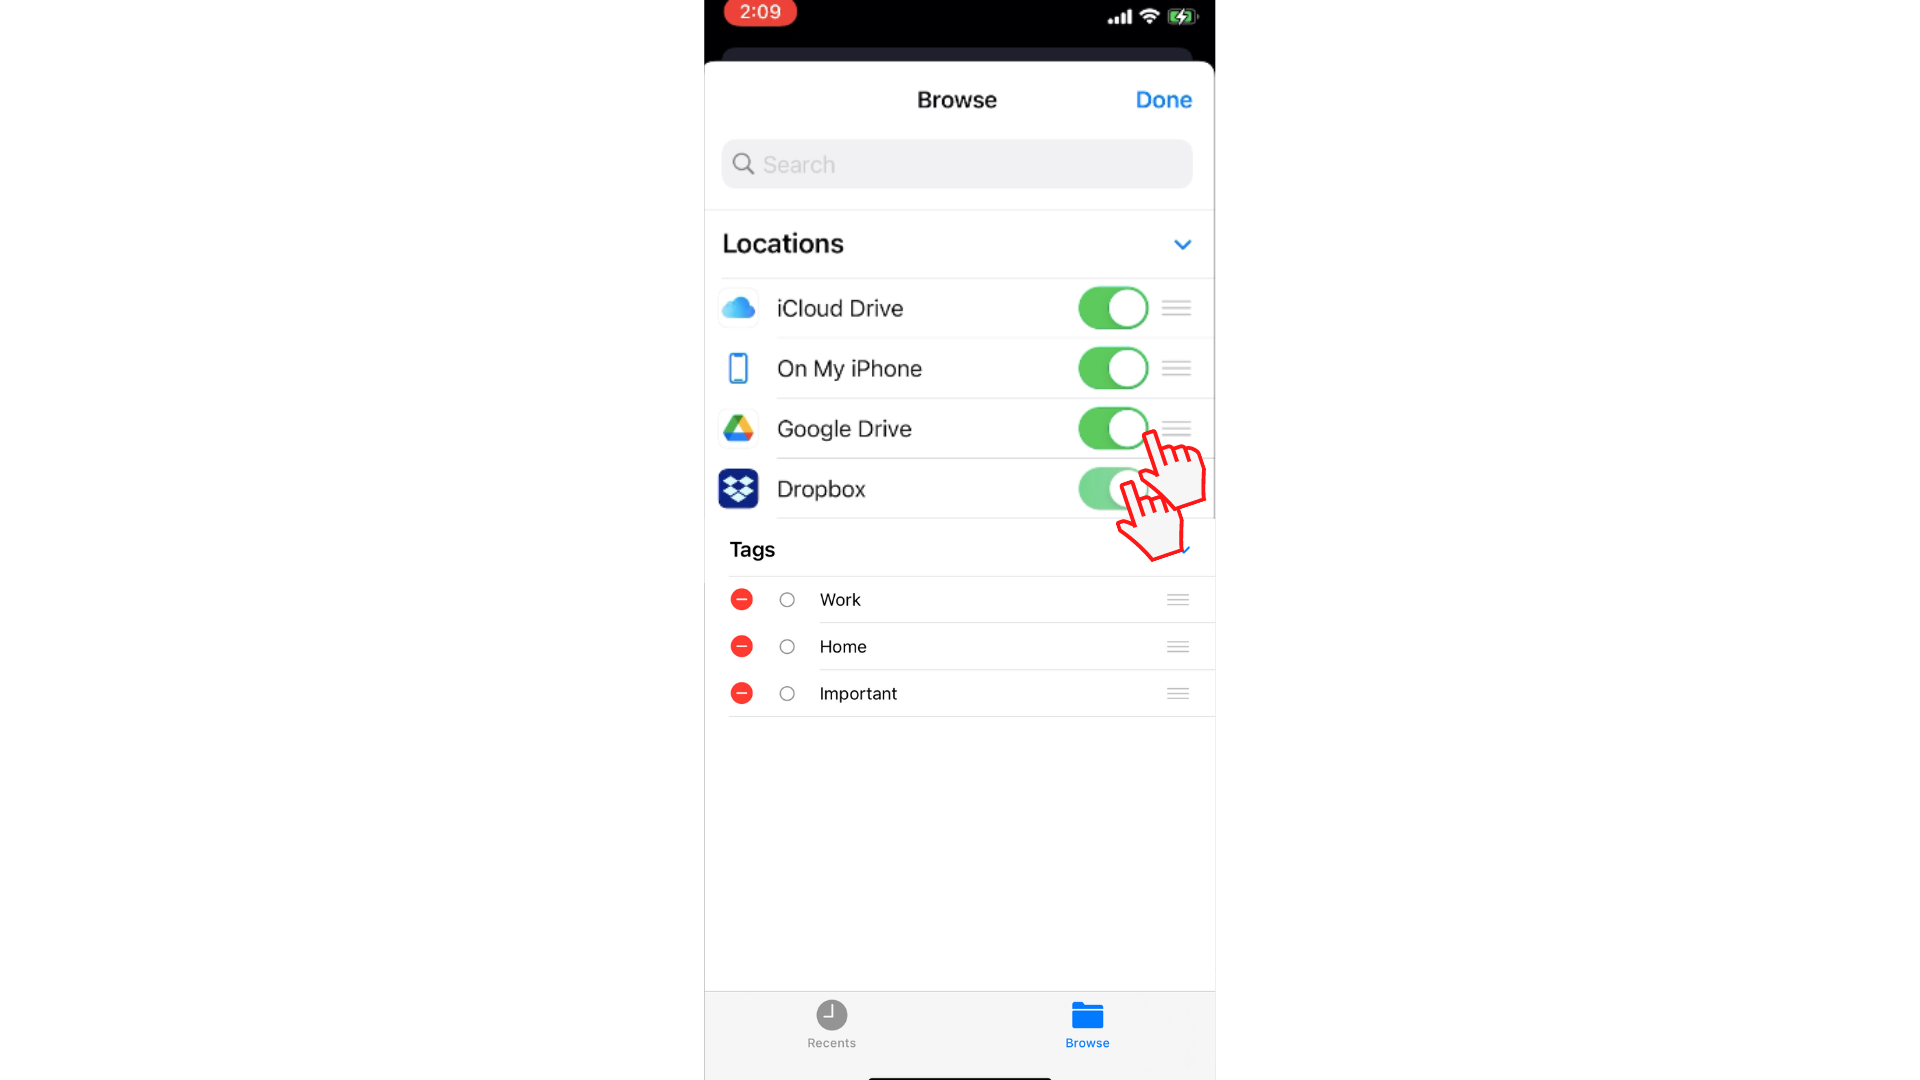 Pengguna geser tombol alih untuk mengizinkan akses ke Dropbox dan Google Drive